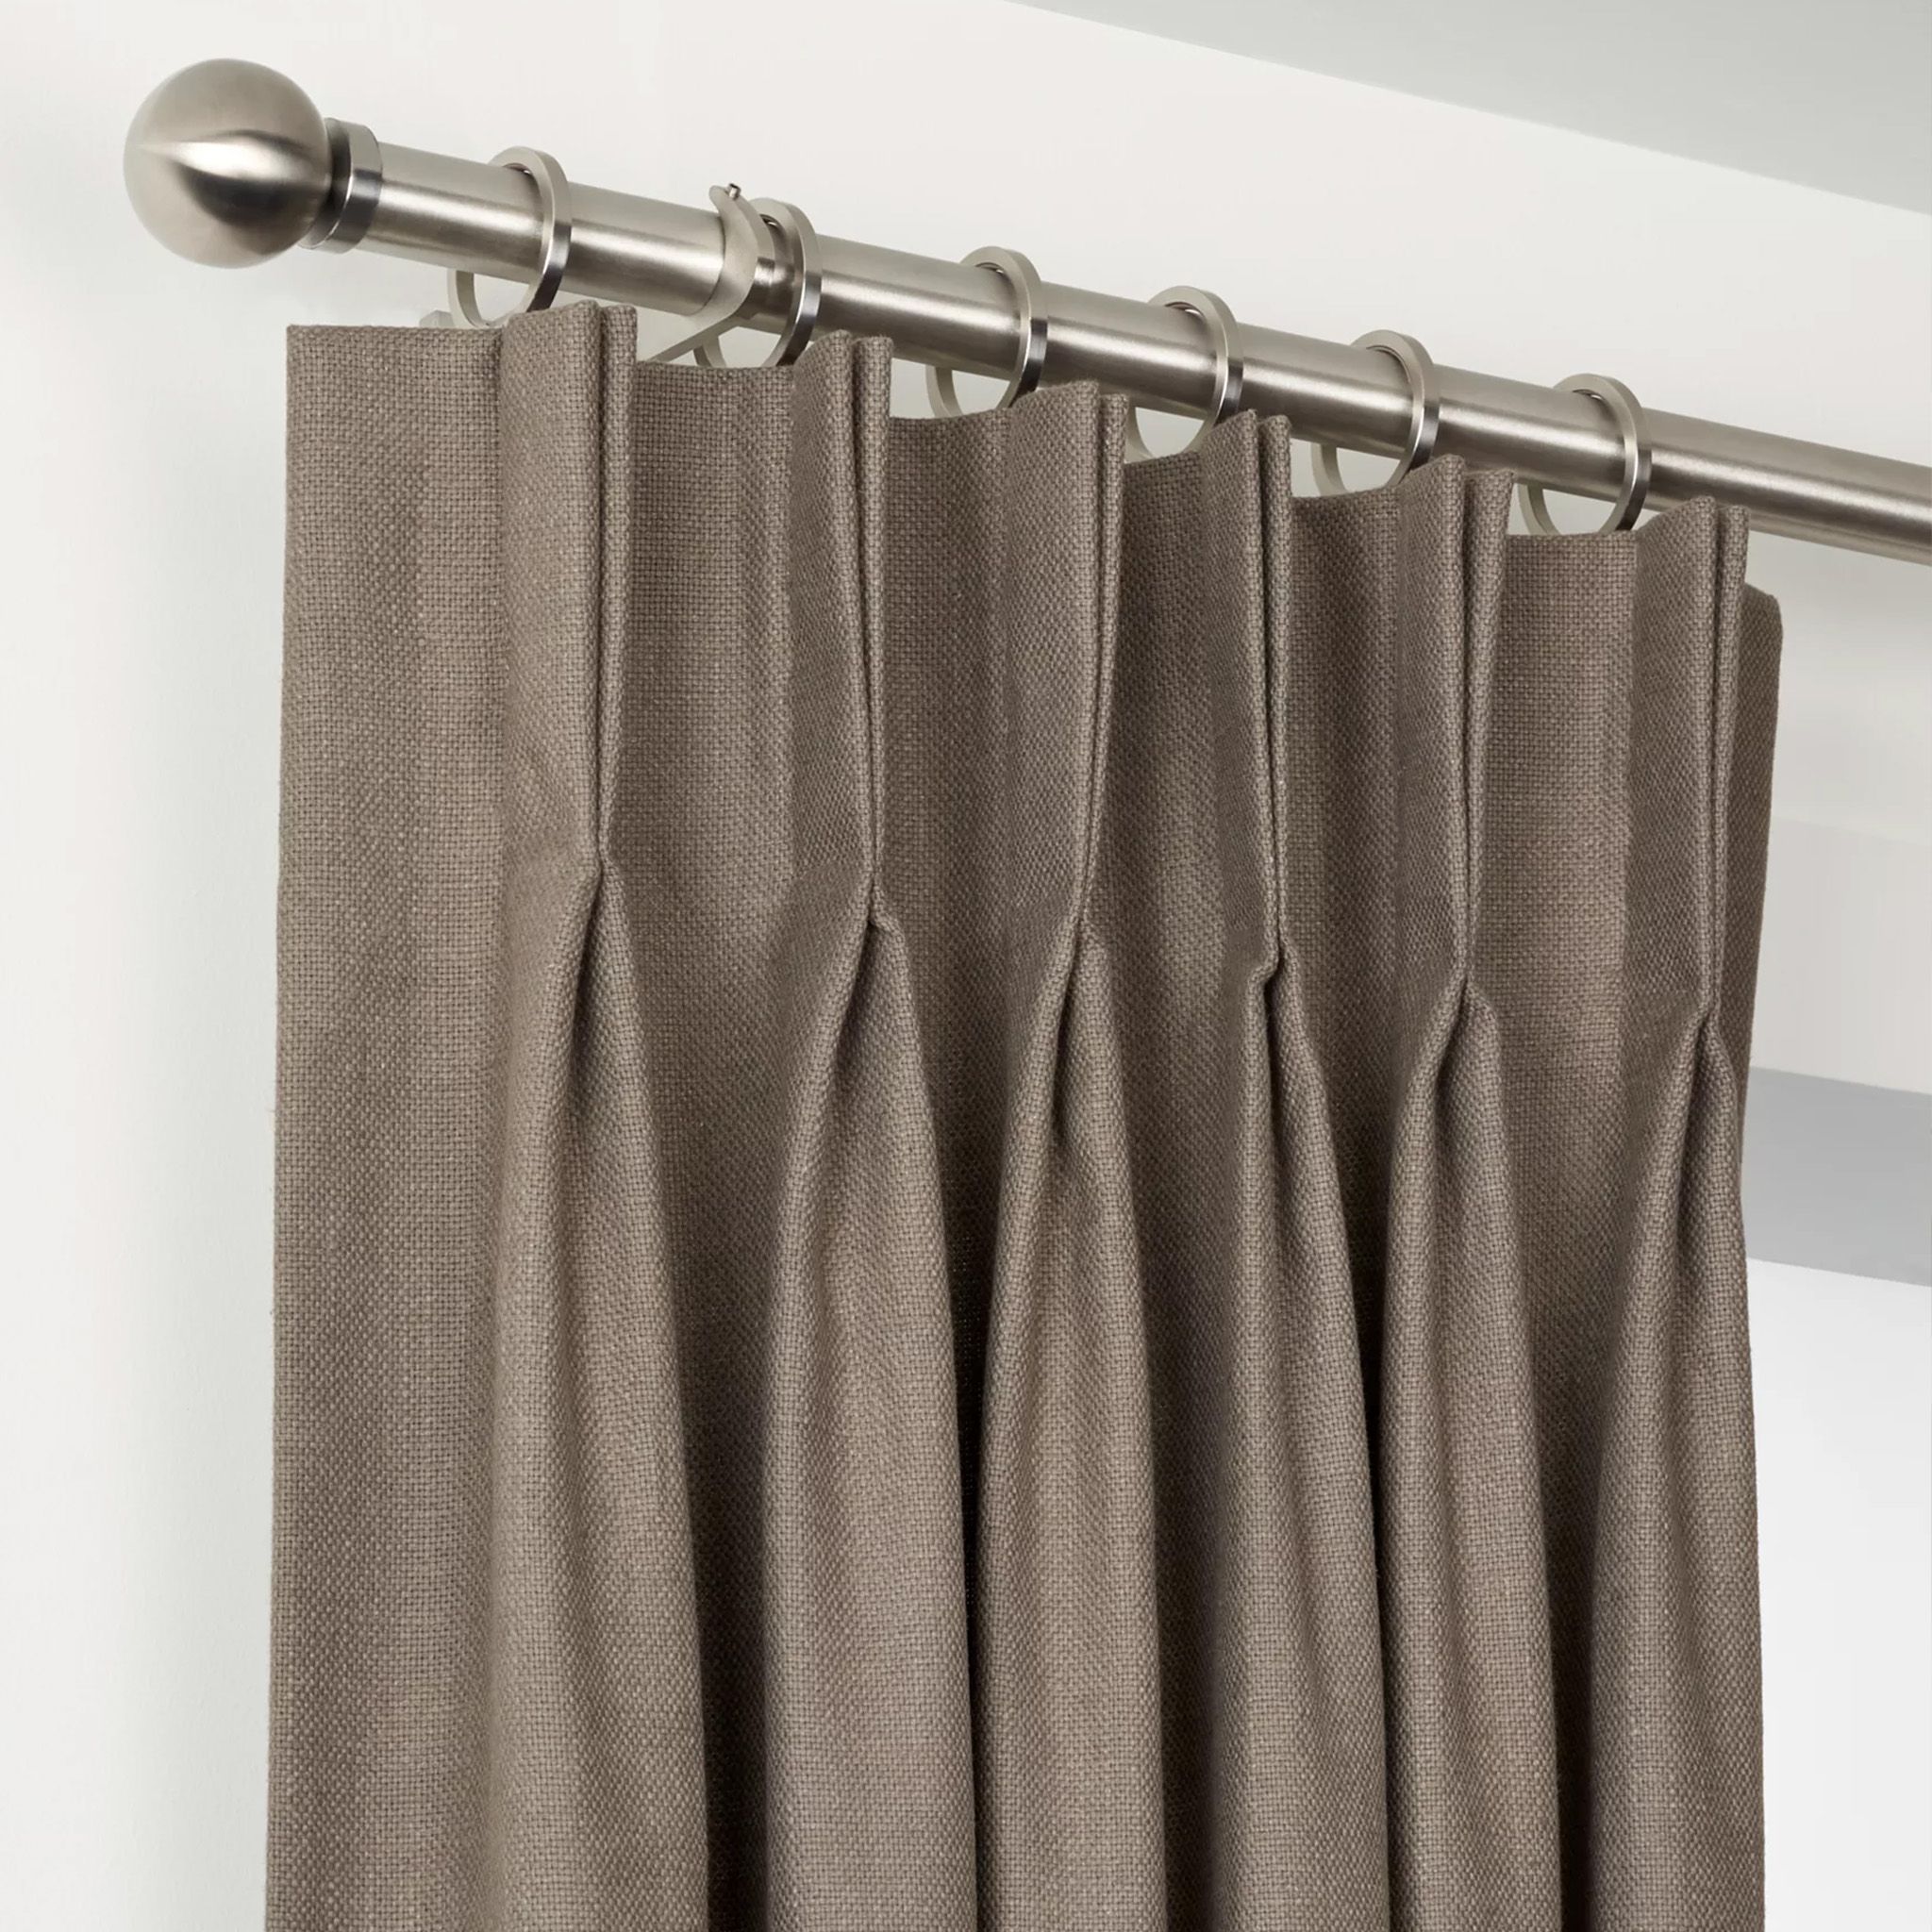 Curtain Pole Kits